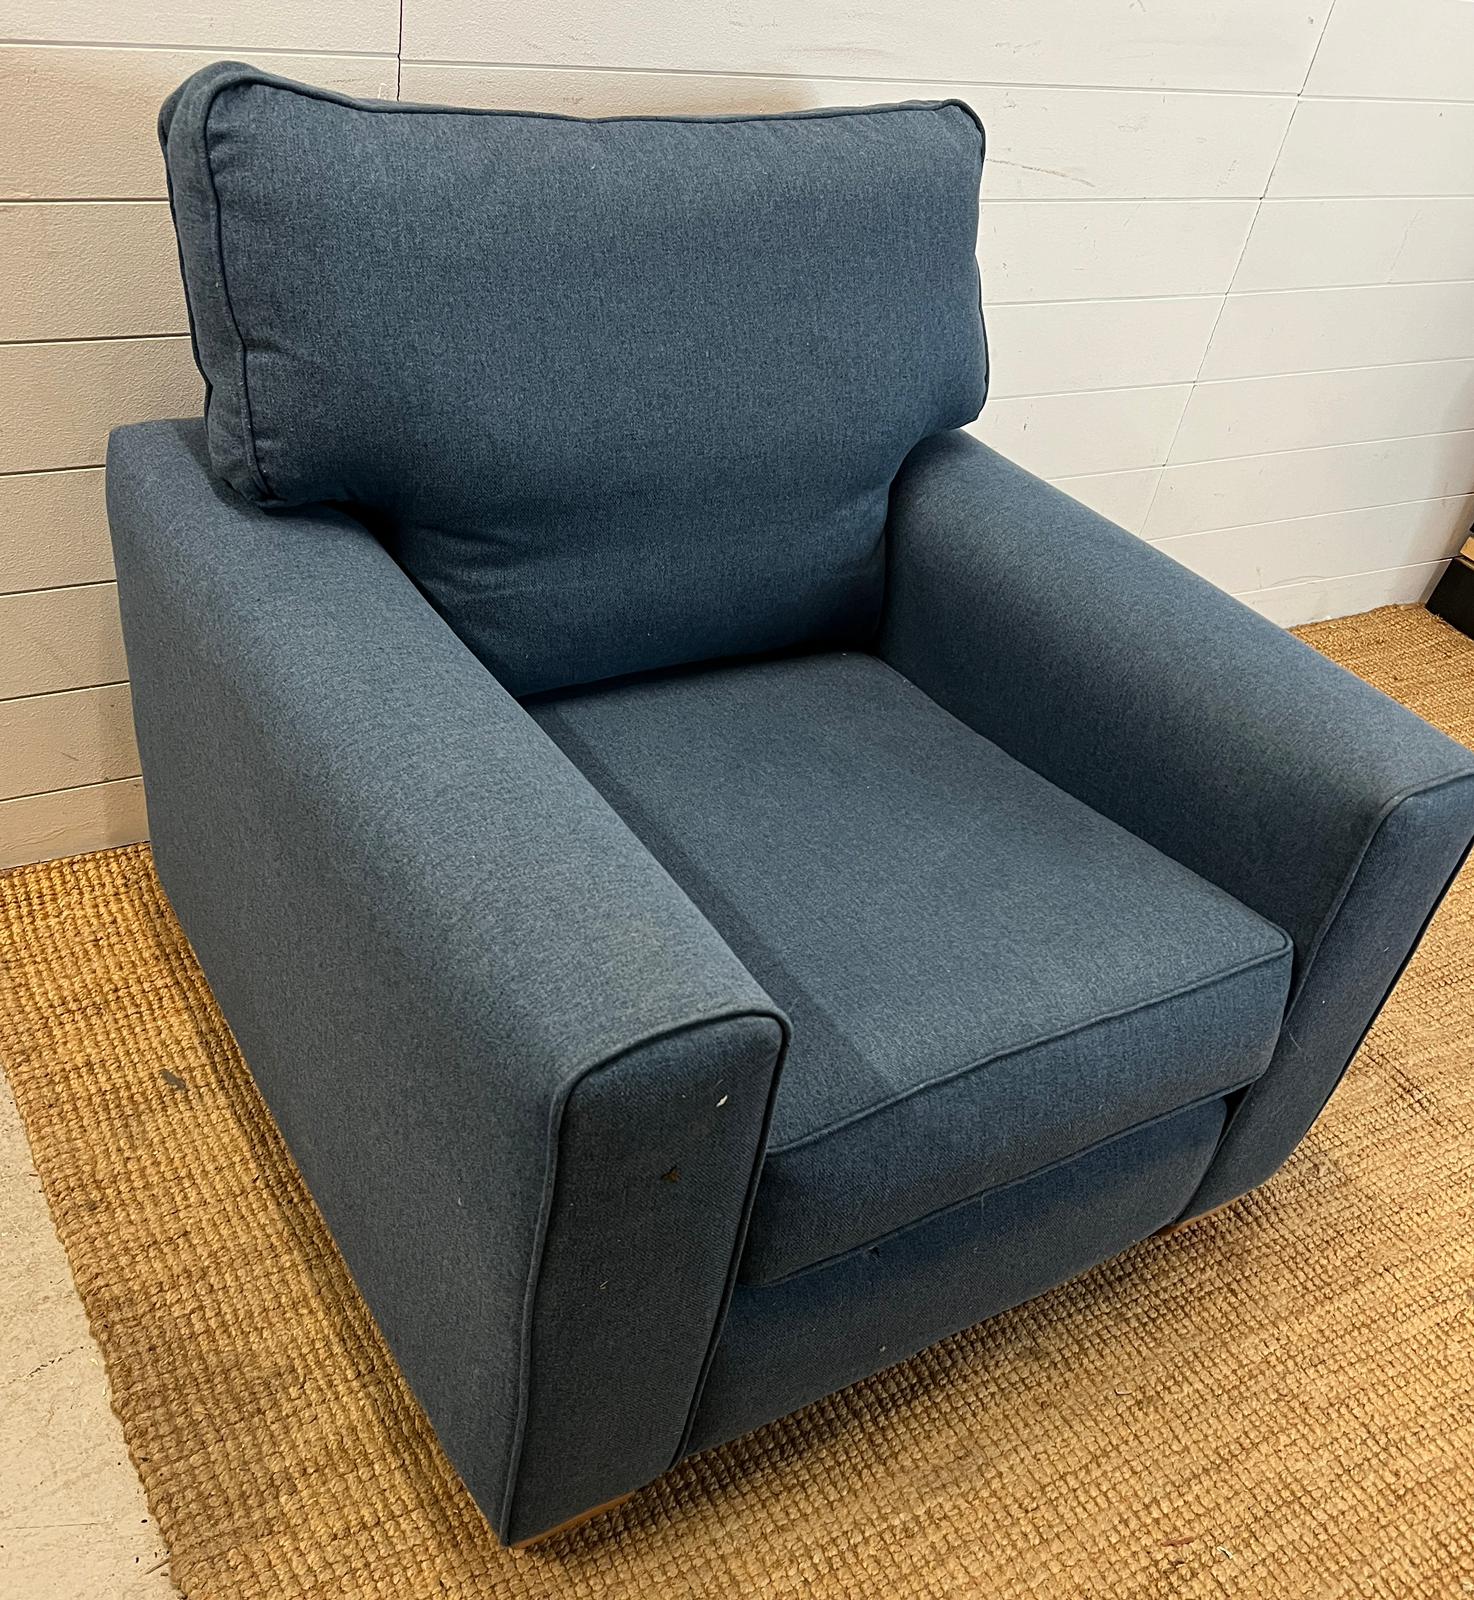 A blue arm chair by Thorngate